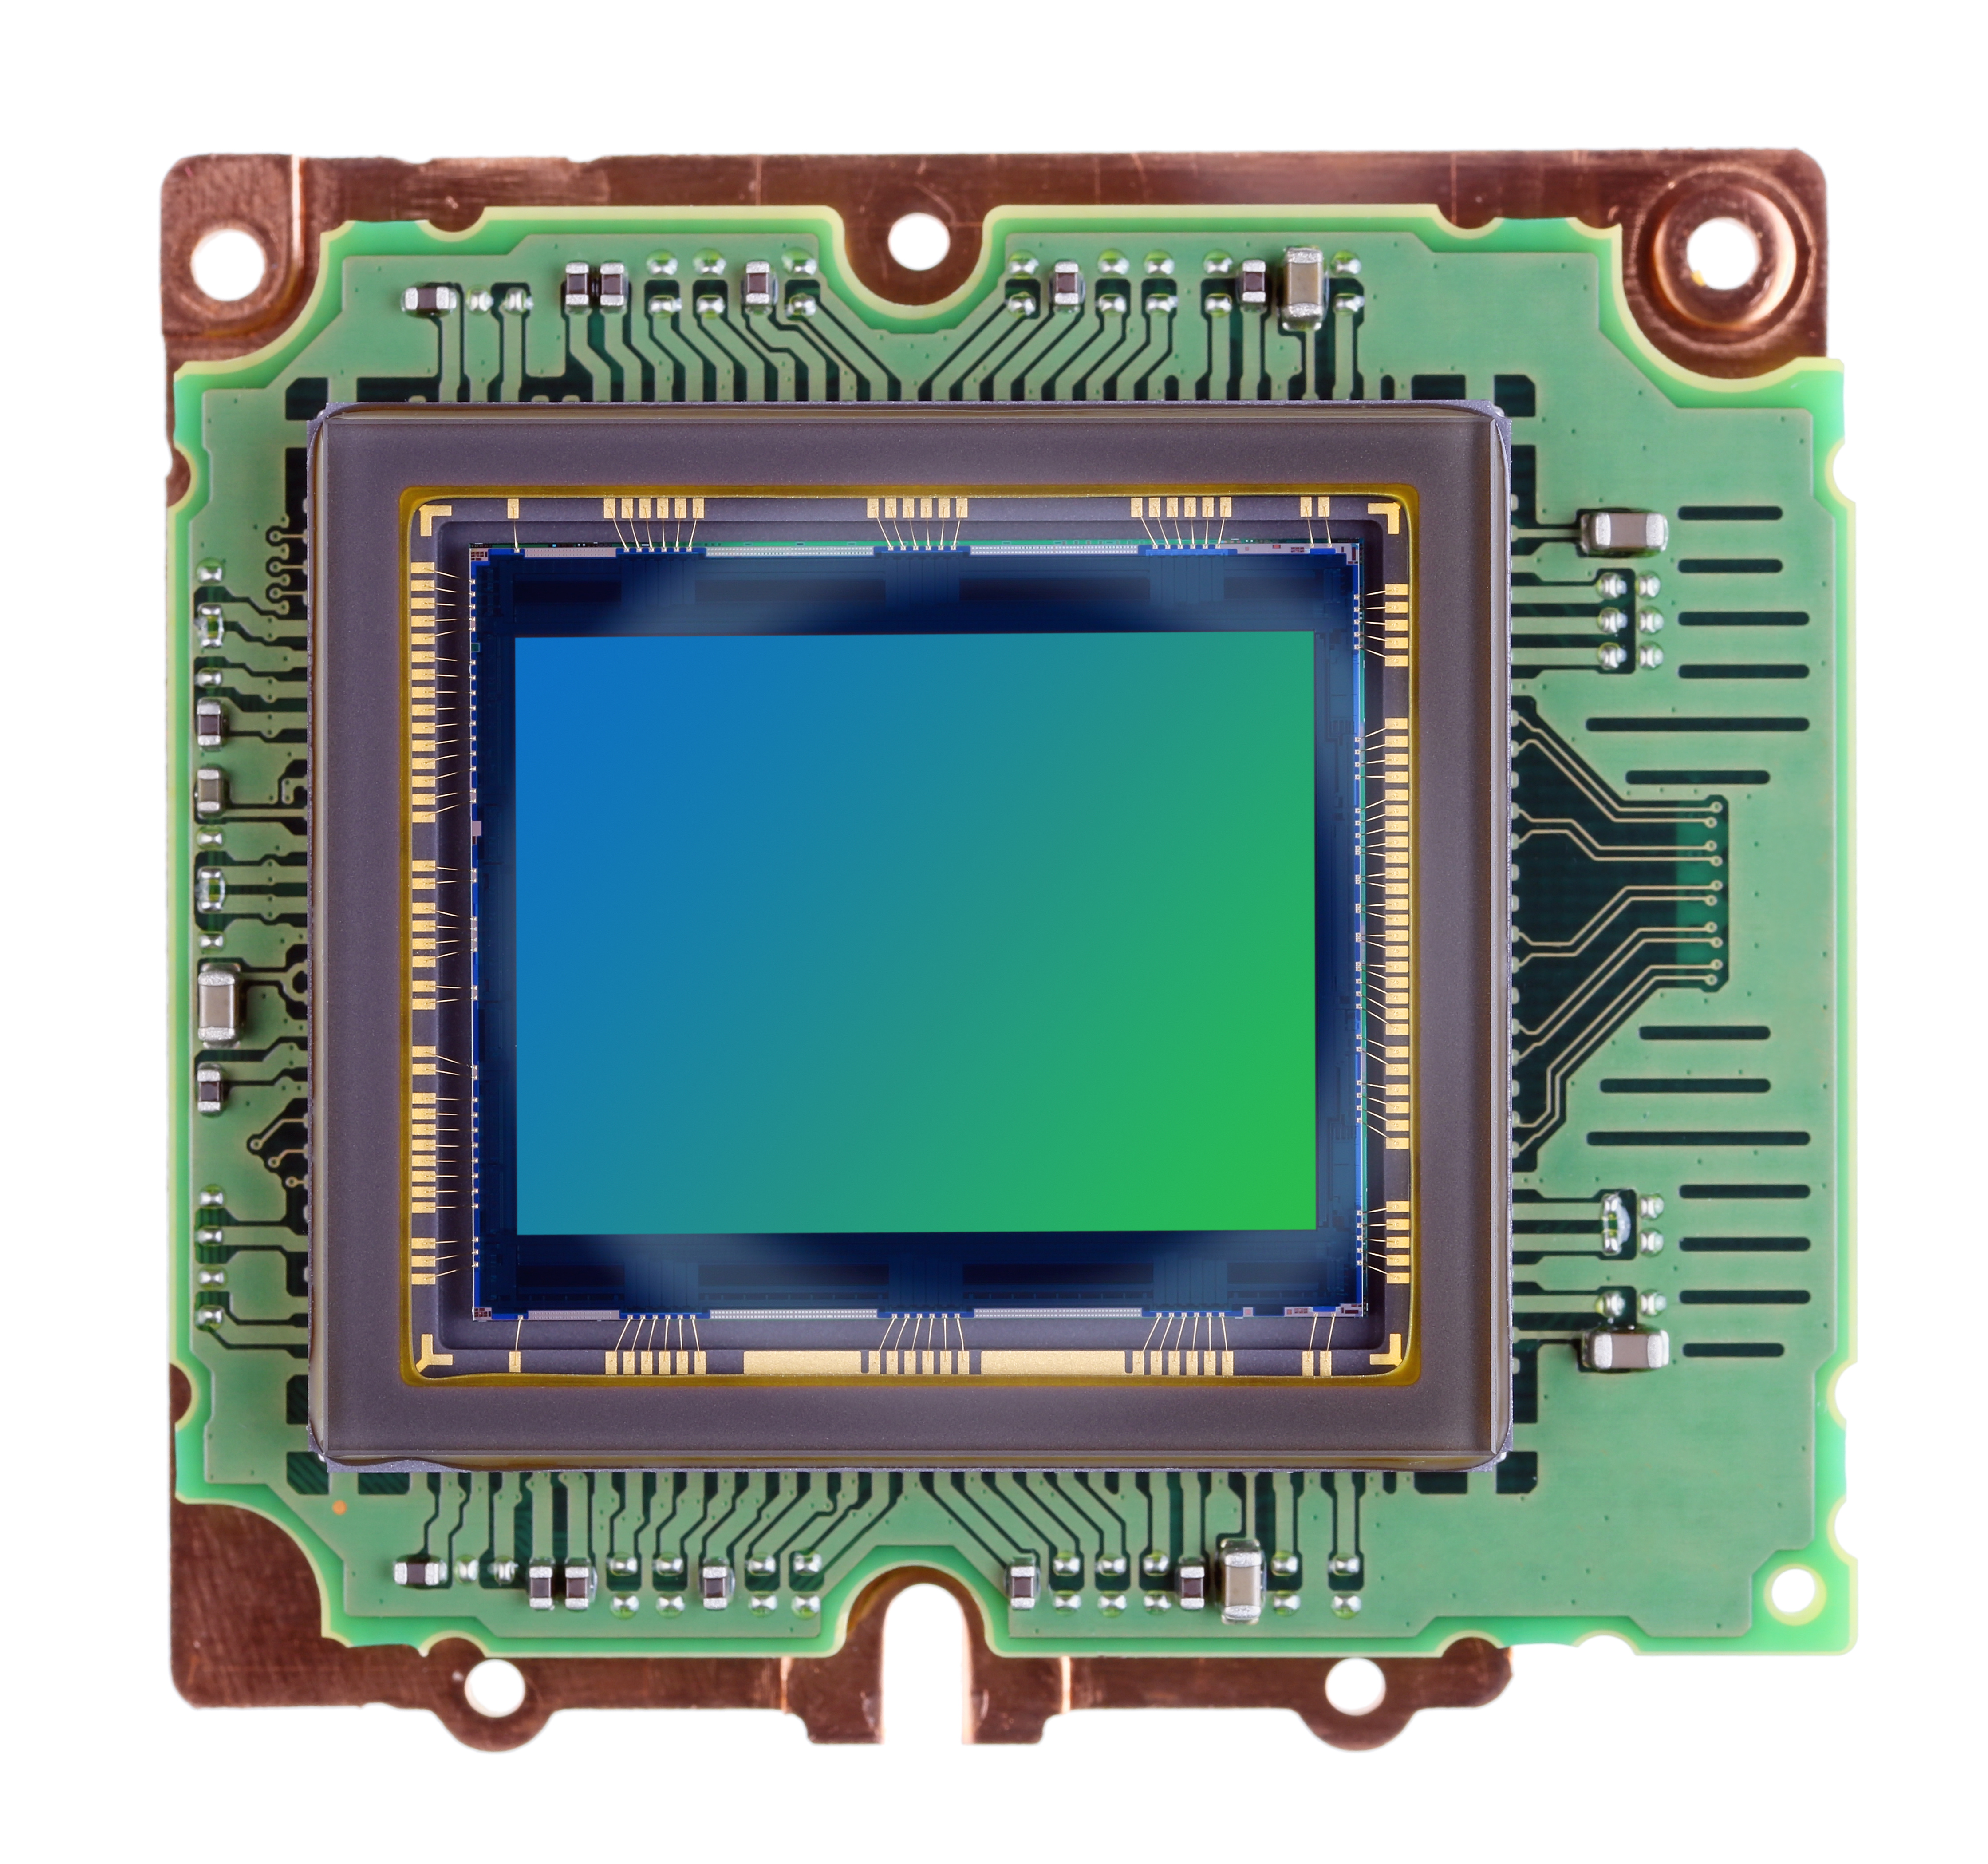 Modern big RGB image  sensor from digital photo camera established on the standard  copper radiator.